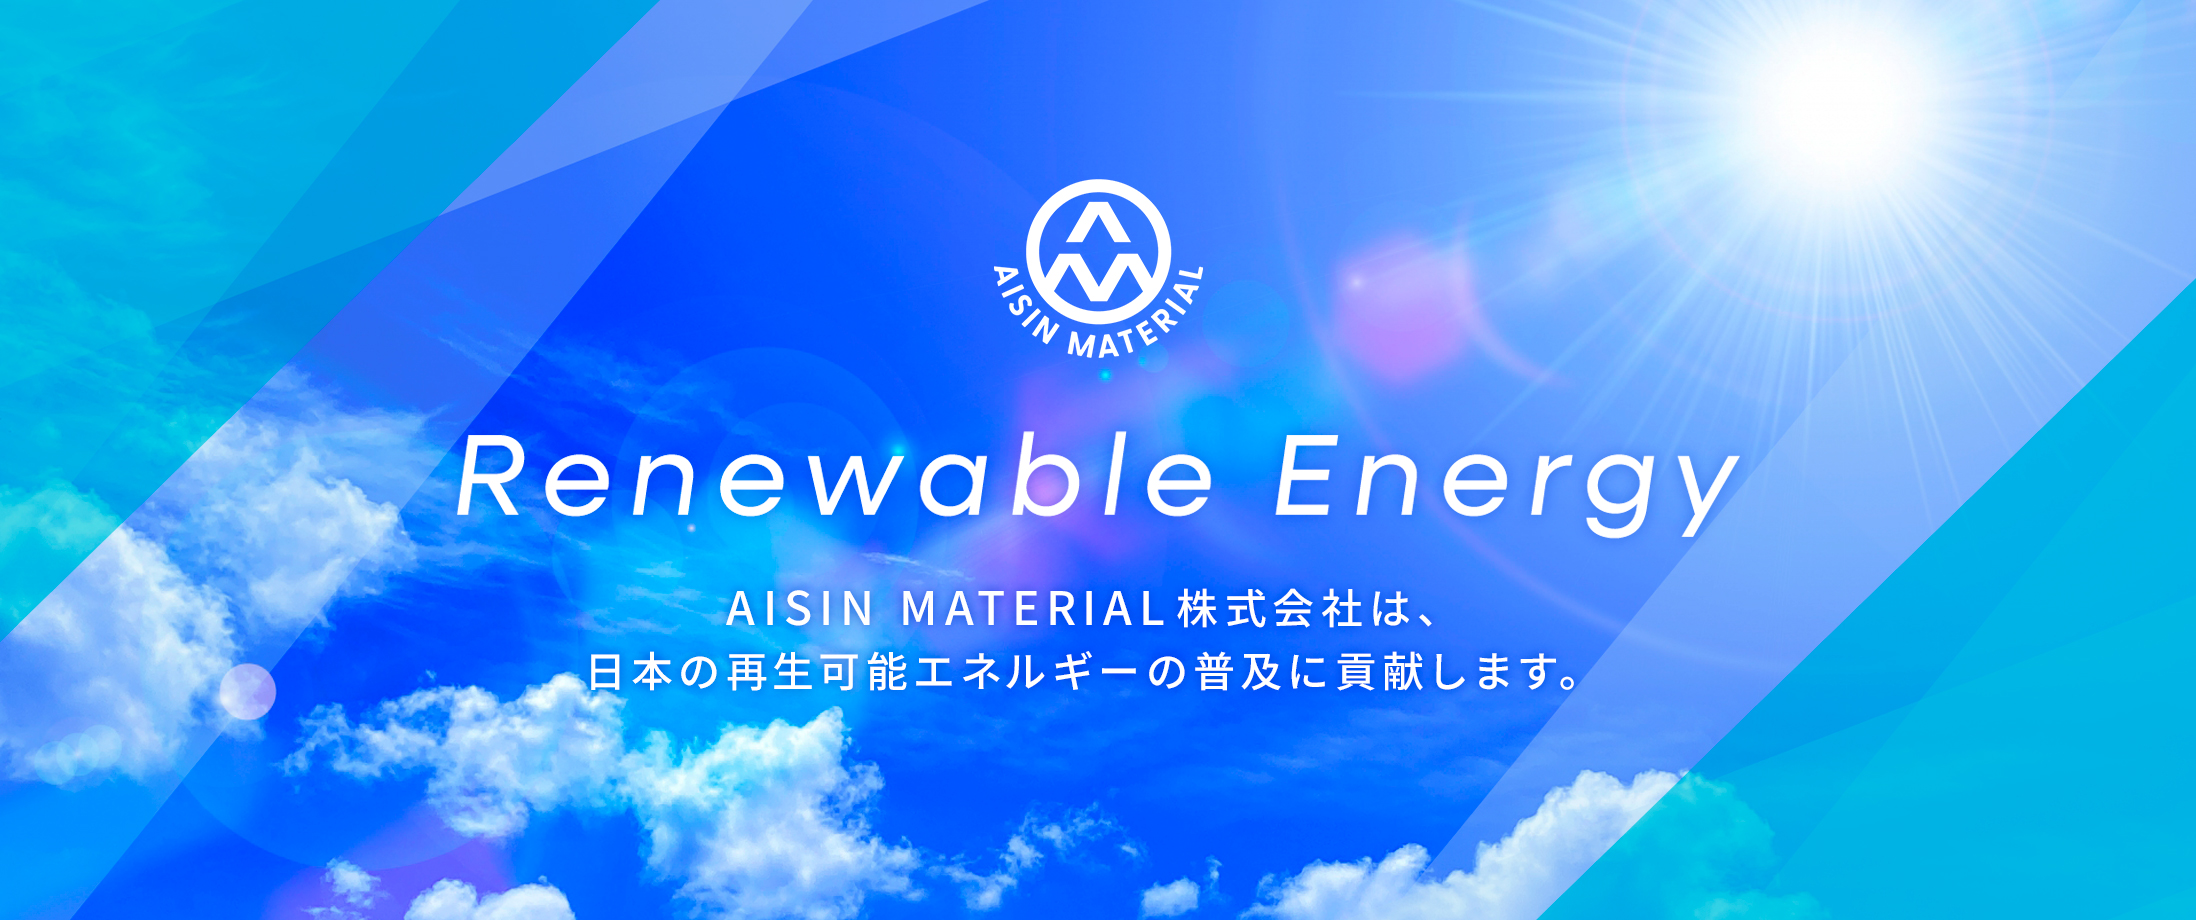 AISIN MATERIAL株式会社　AISIN MATERIAL株式会社は、日本の再生可能エネルギーの普及に貢献します。